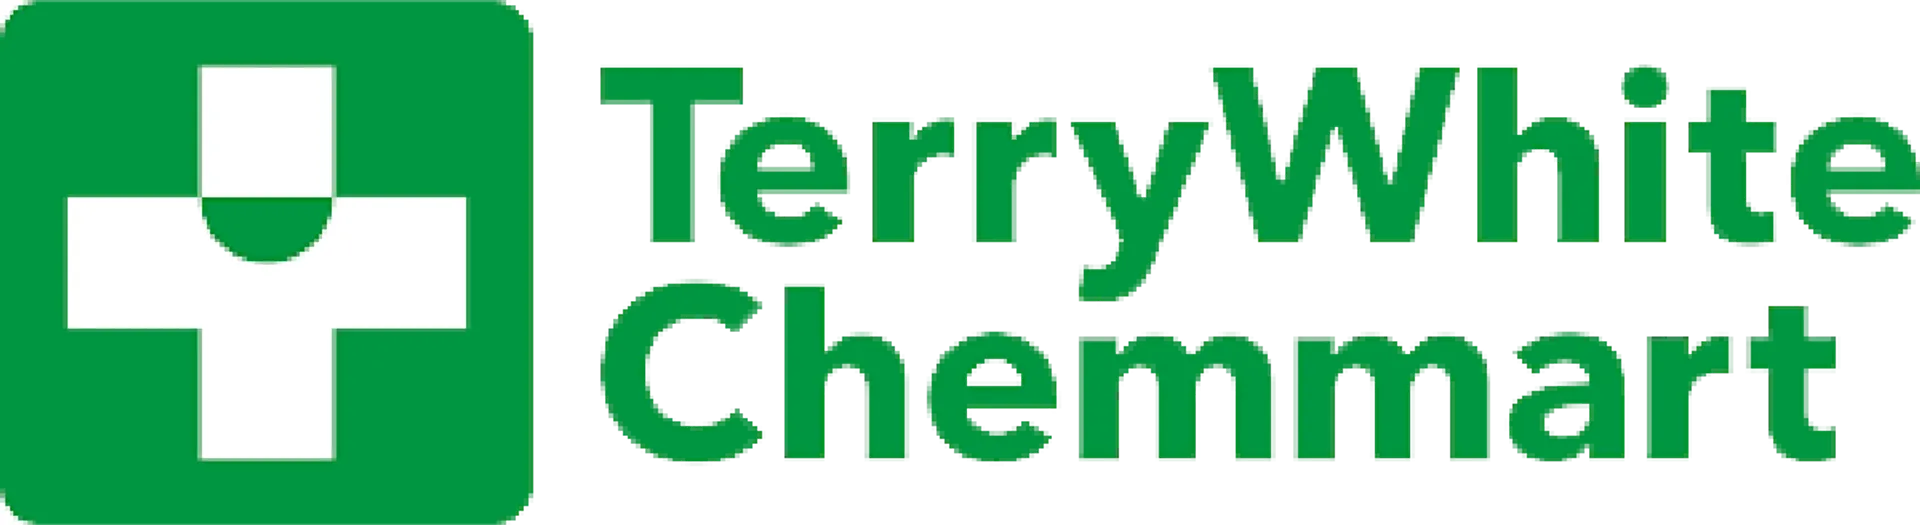 TERRYWHITE CHEMMART logo of current flyer